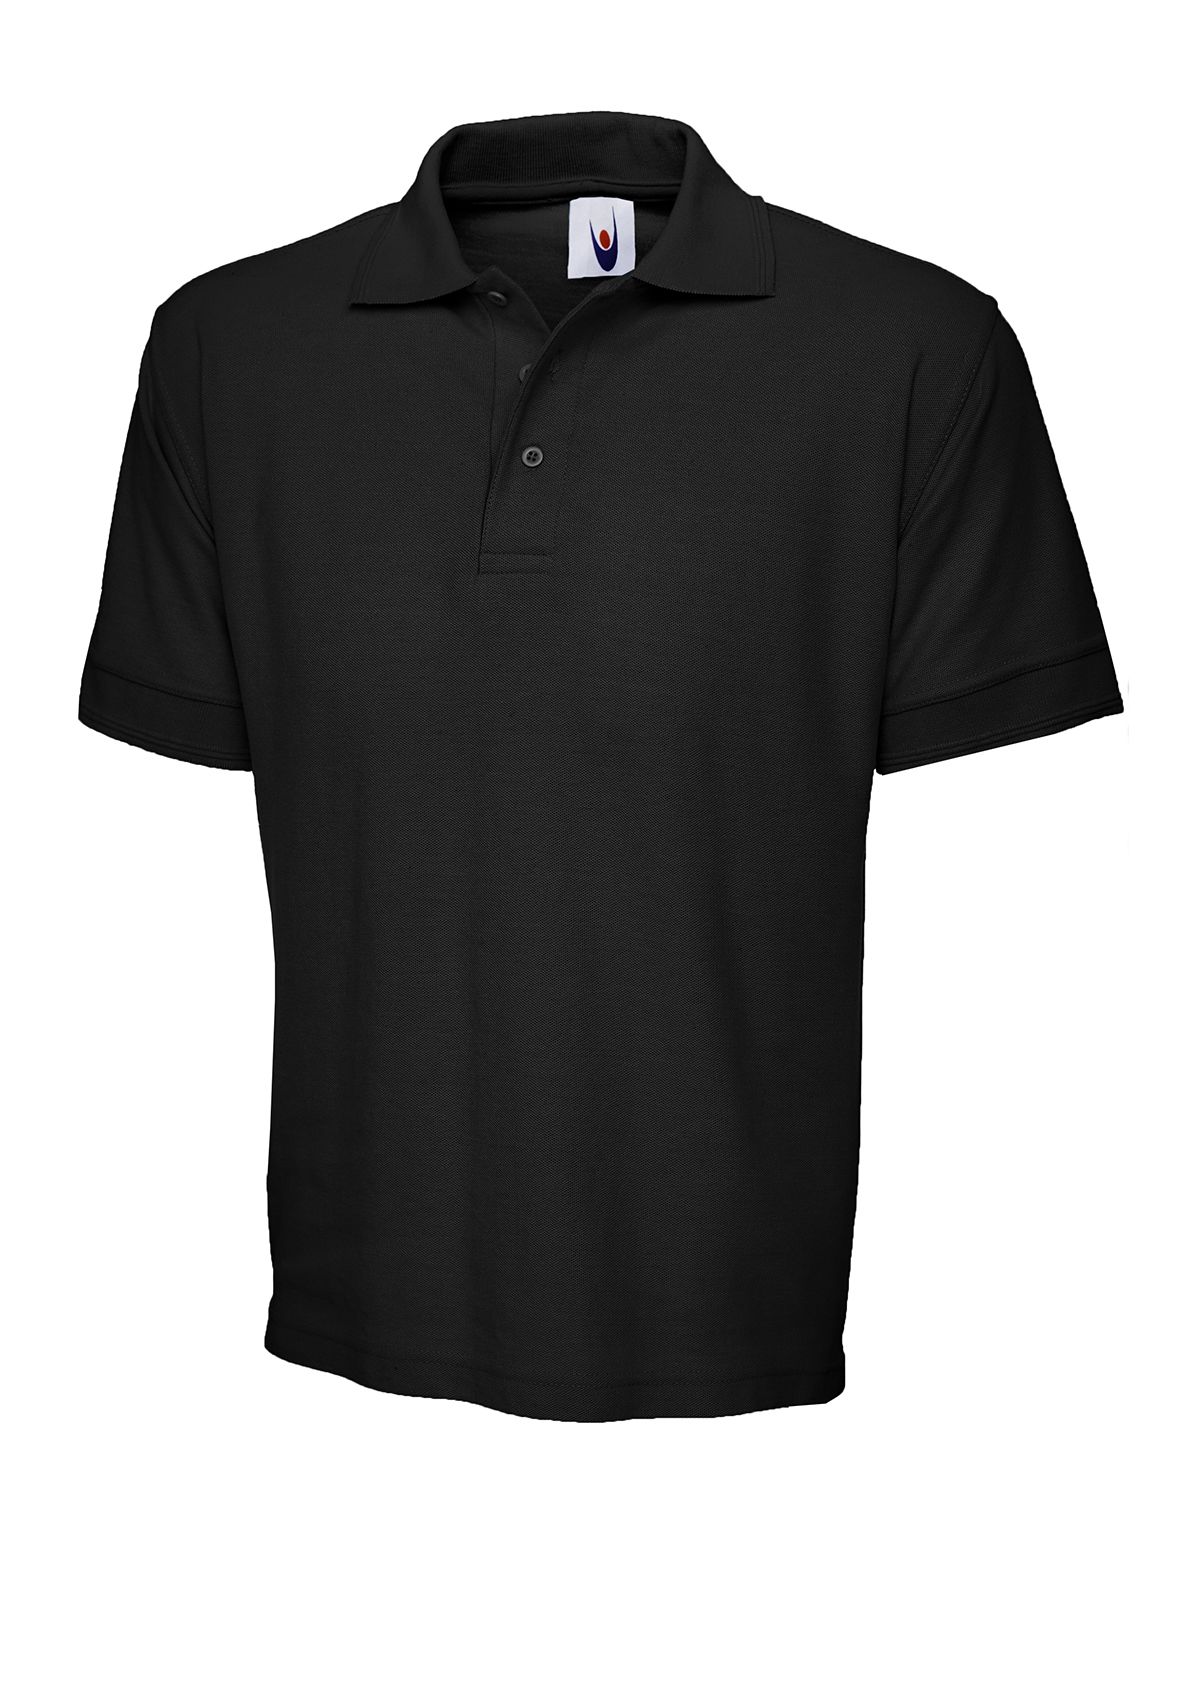 Uneek UC102 Black Cotton, Polyester Polo Shirt, UK- 38 → 40in, EUR- 96 → 101cm